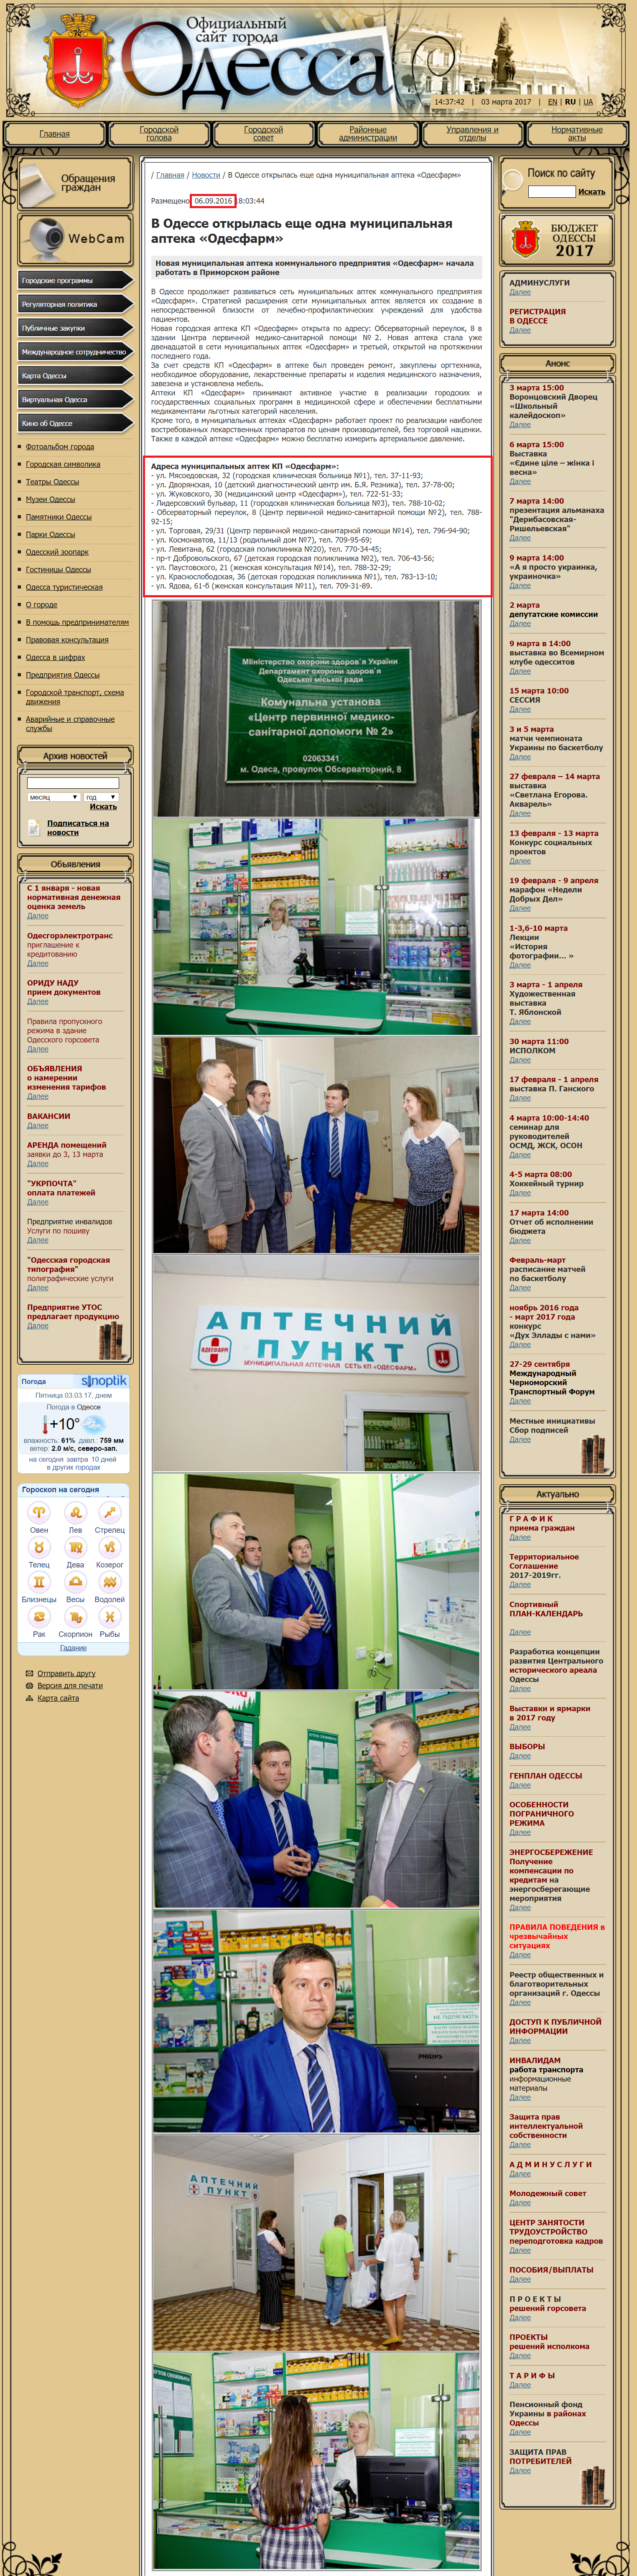 http://omr.gov.ua/ru/news/87405/